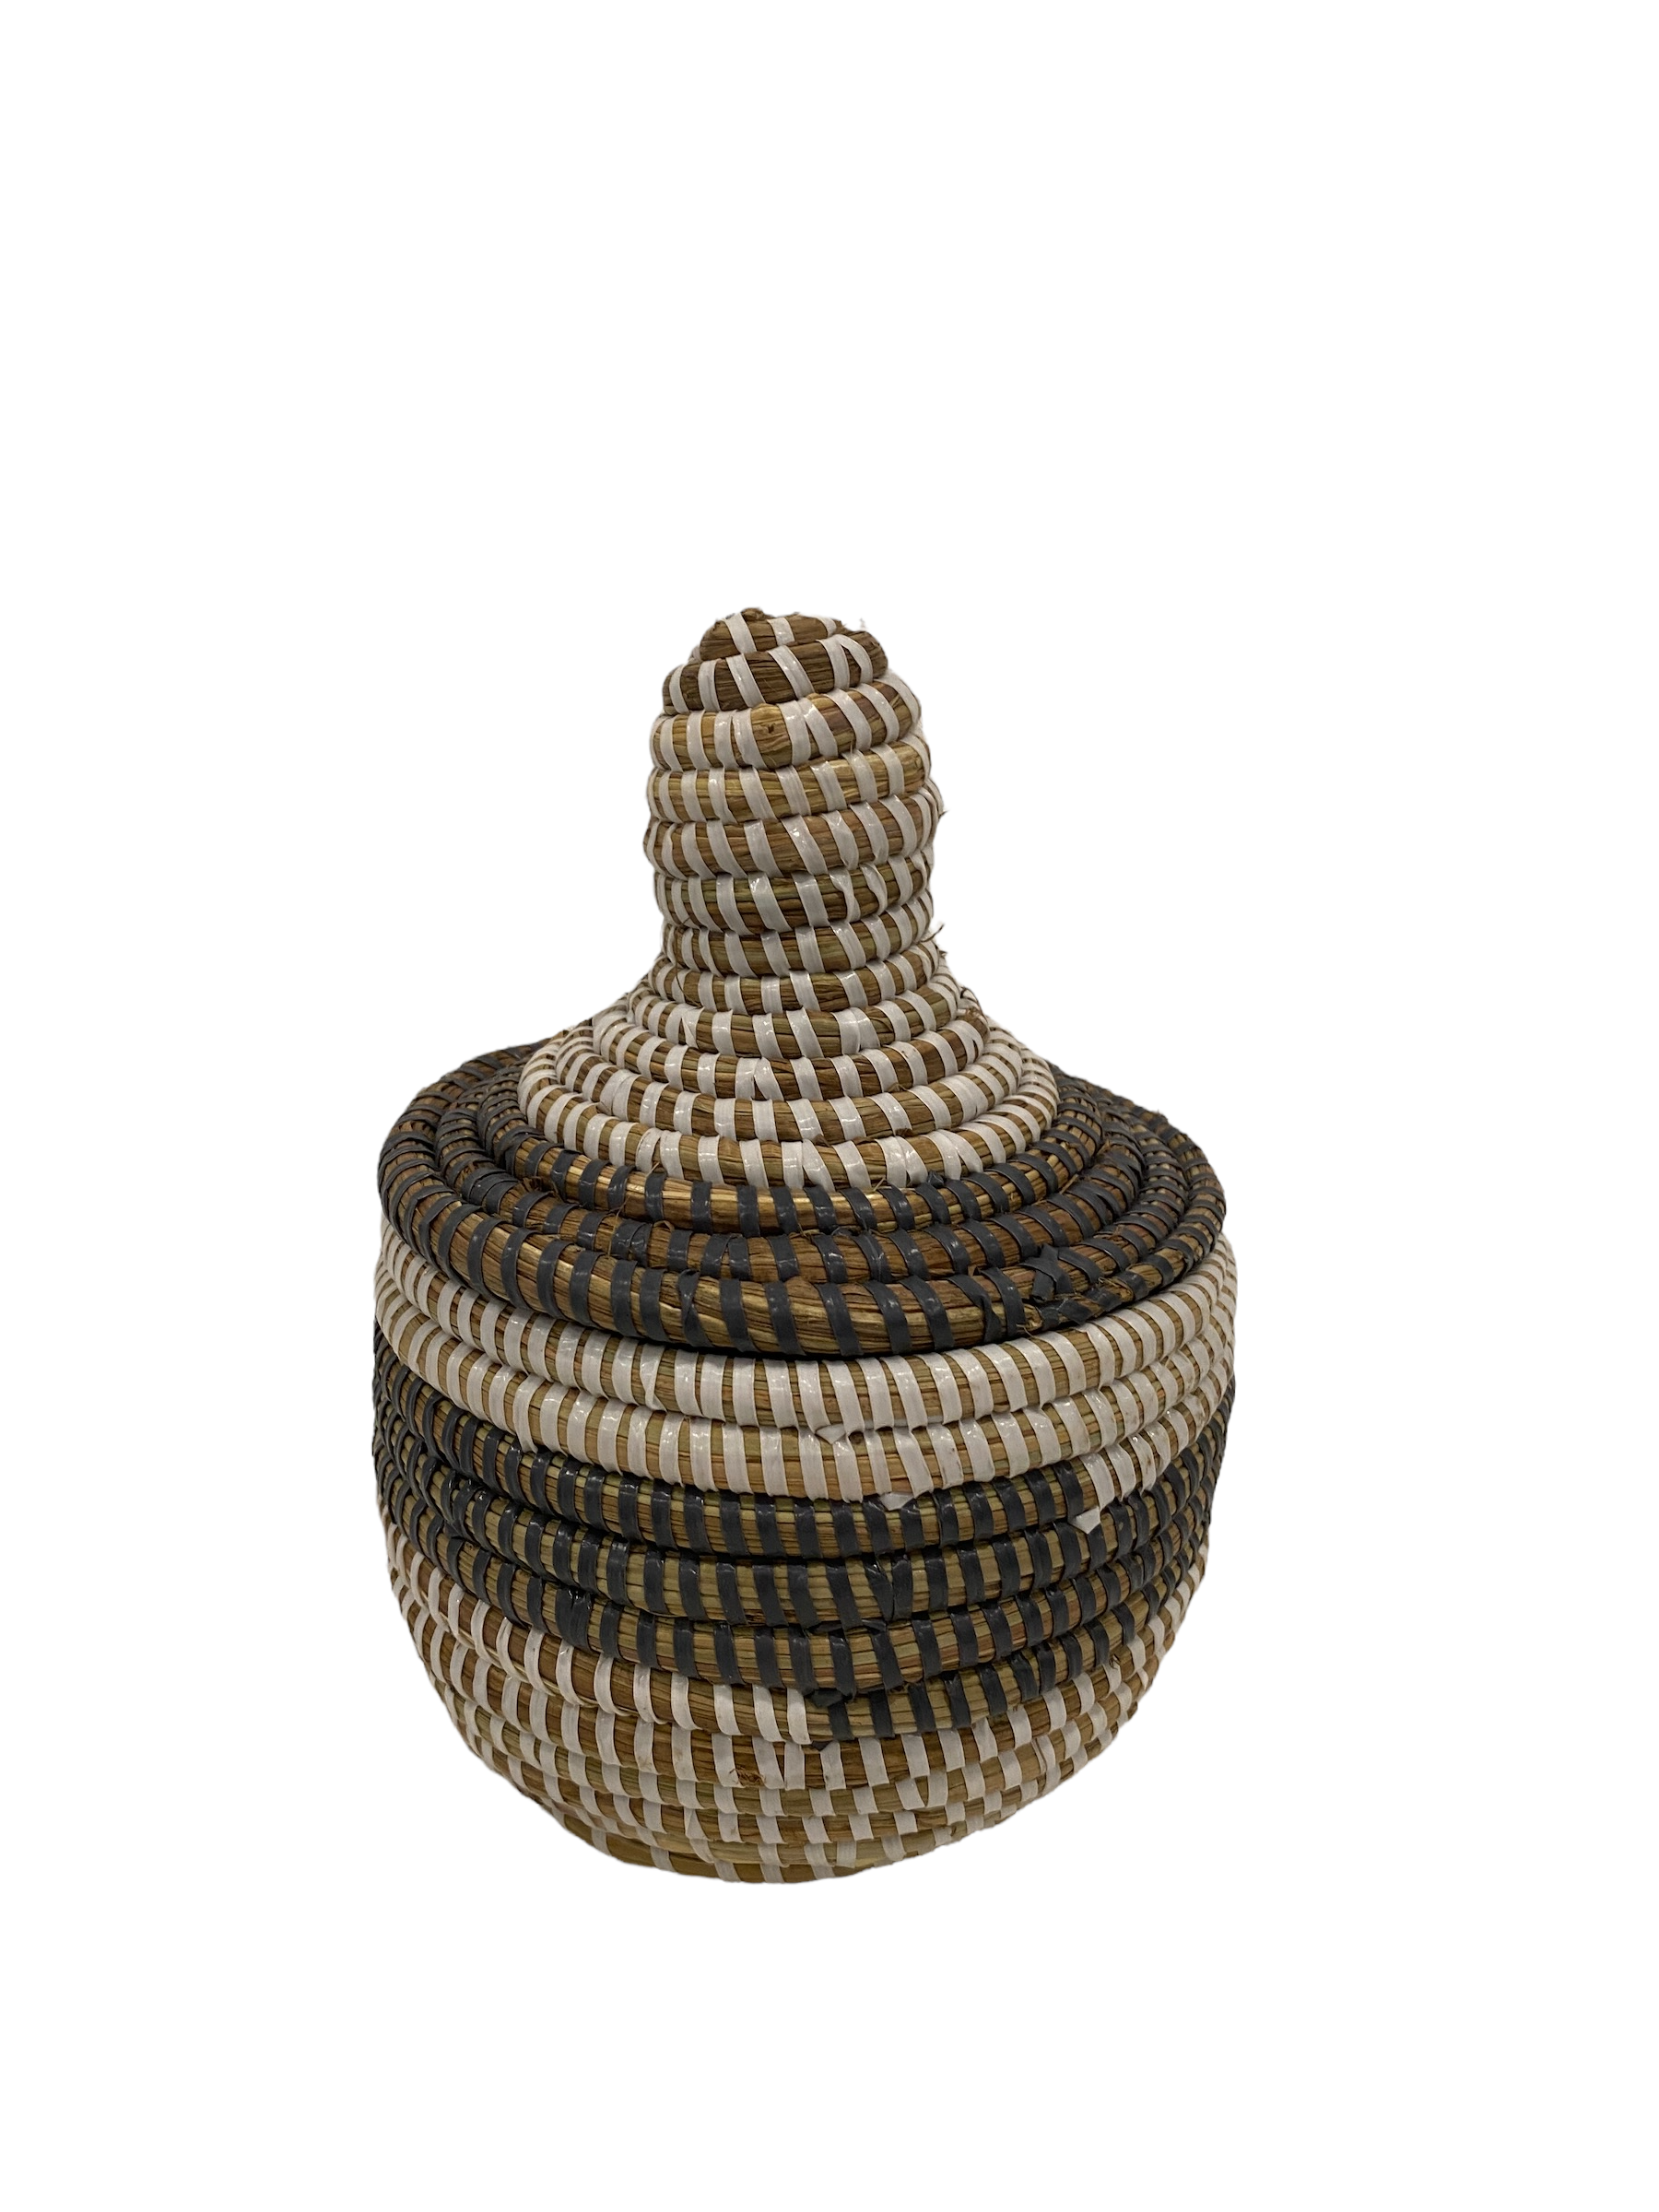 botanicalboysuk Senegal Basket Small - (5801)